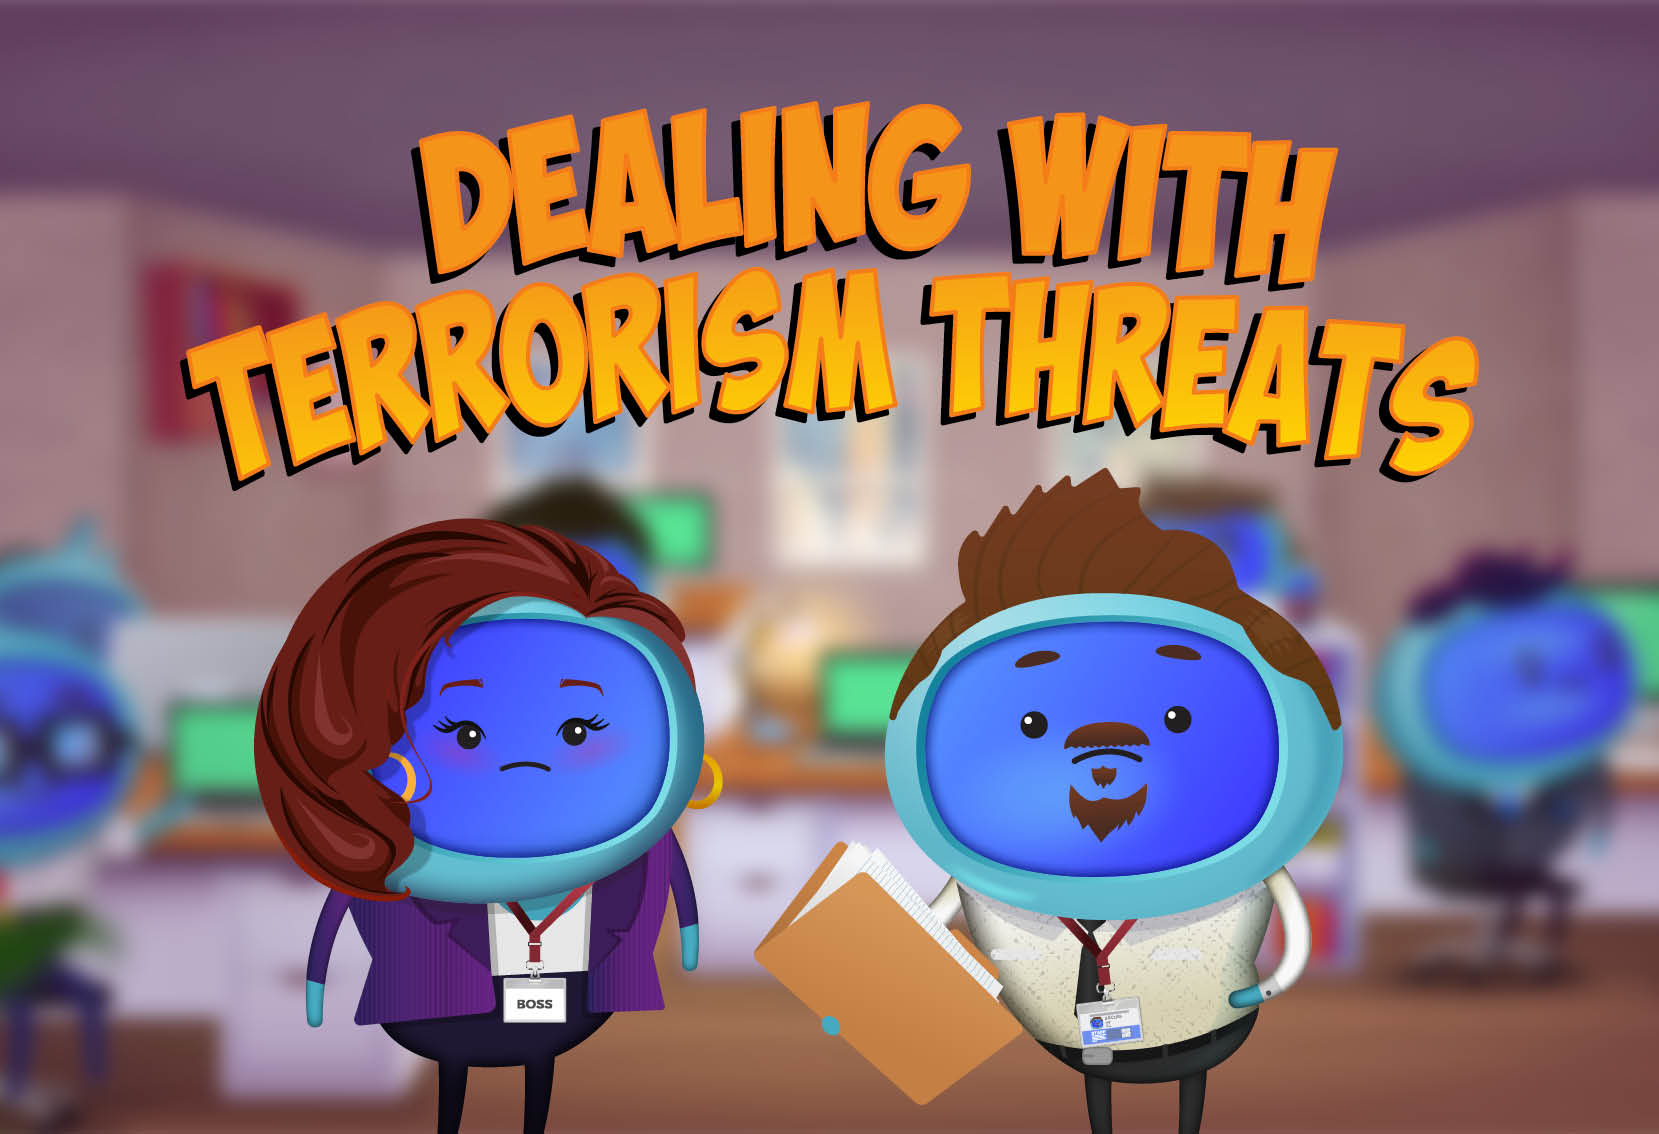 iAM 00161 - Dealing with Terrorism Threats - LMS Thumbnail (1)